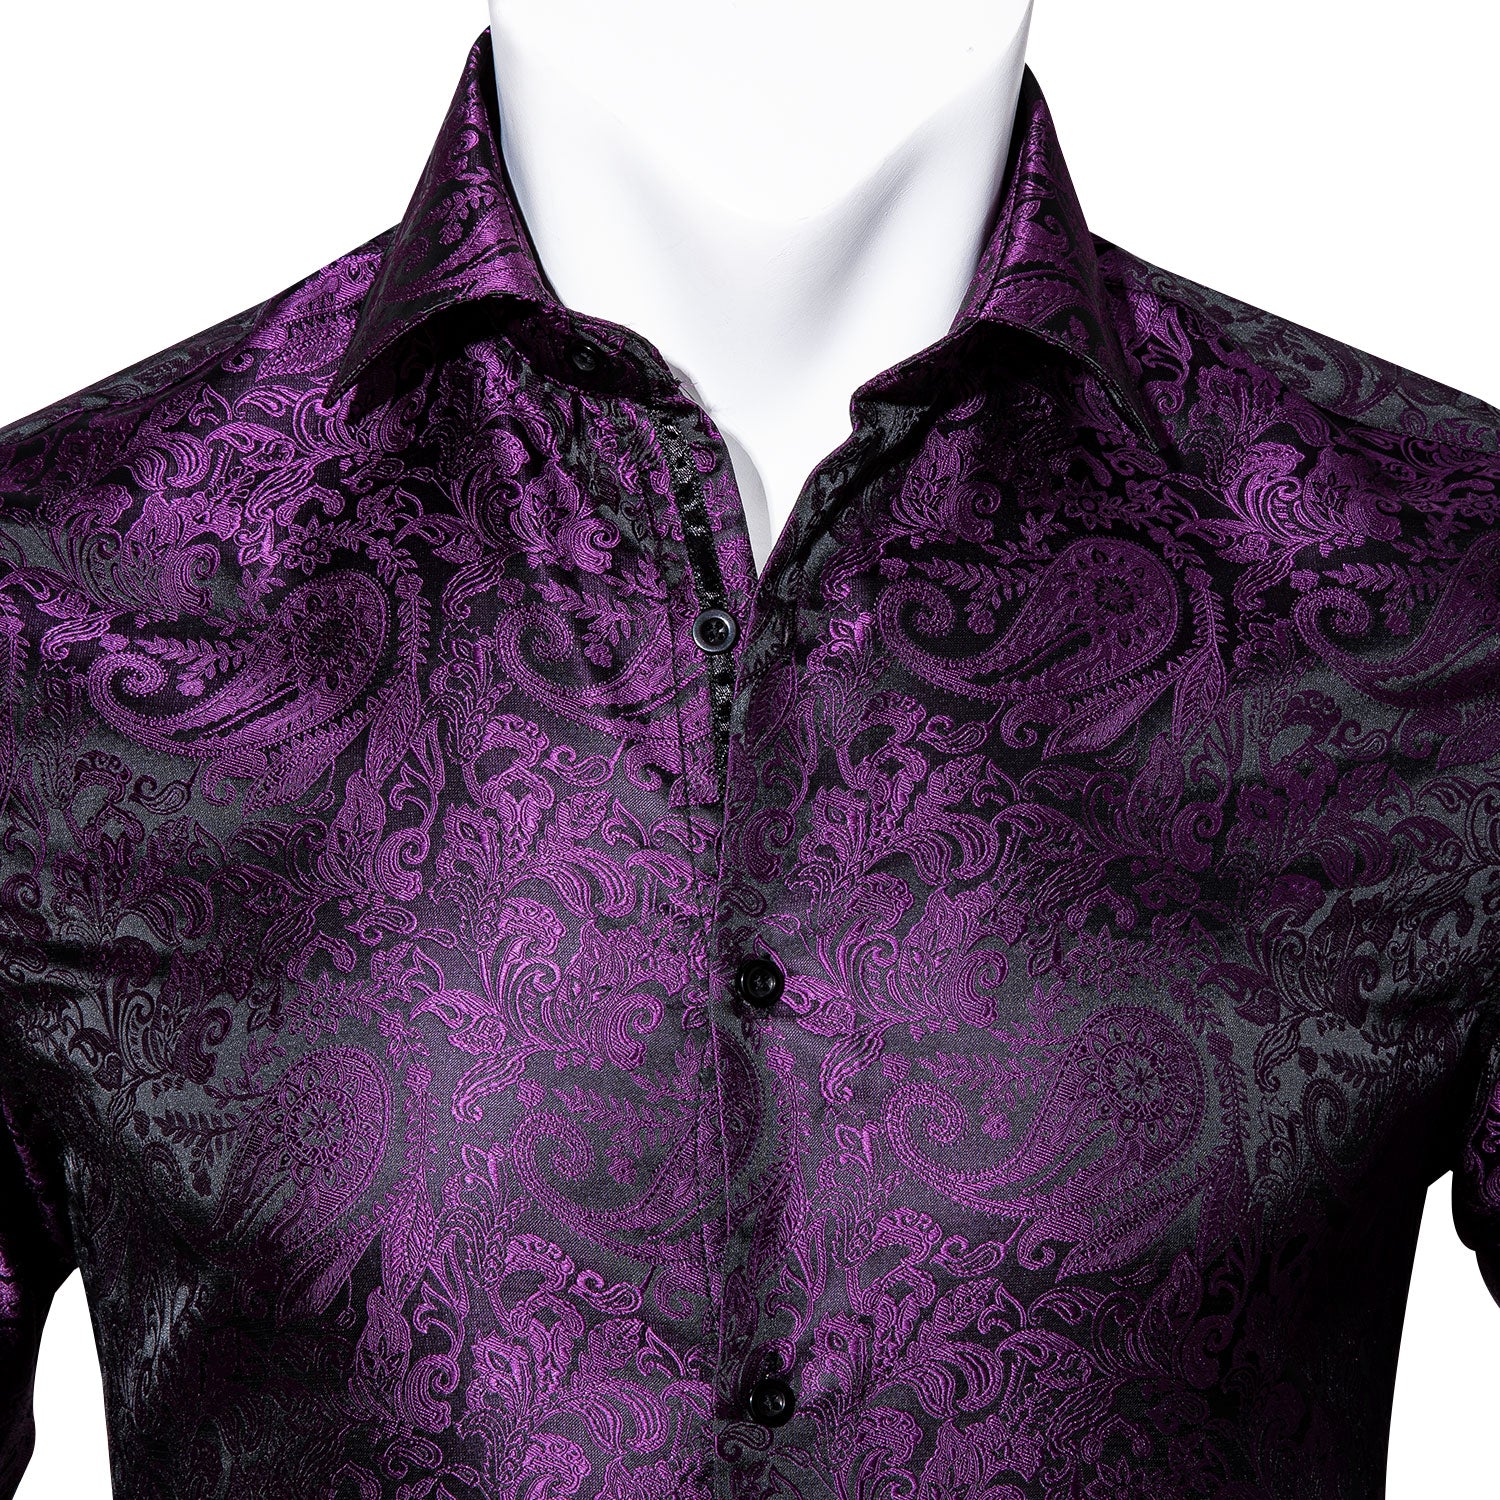 Barry.wang Button Down Shirt Purple Black Paisley Dress Shirt for Men